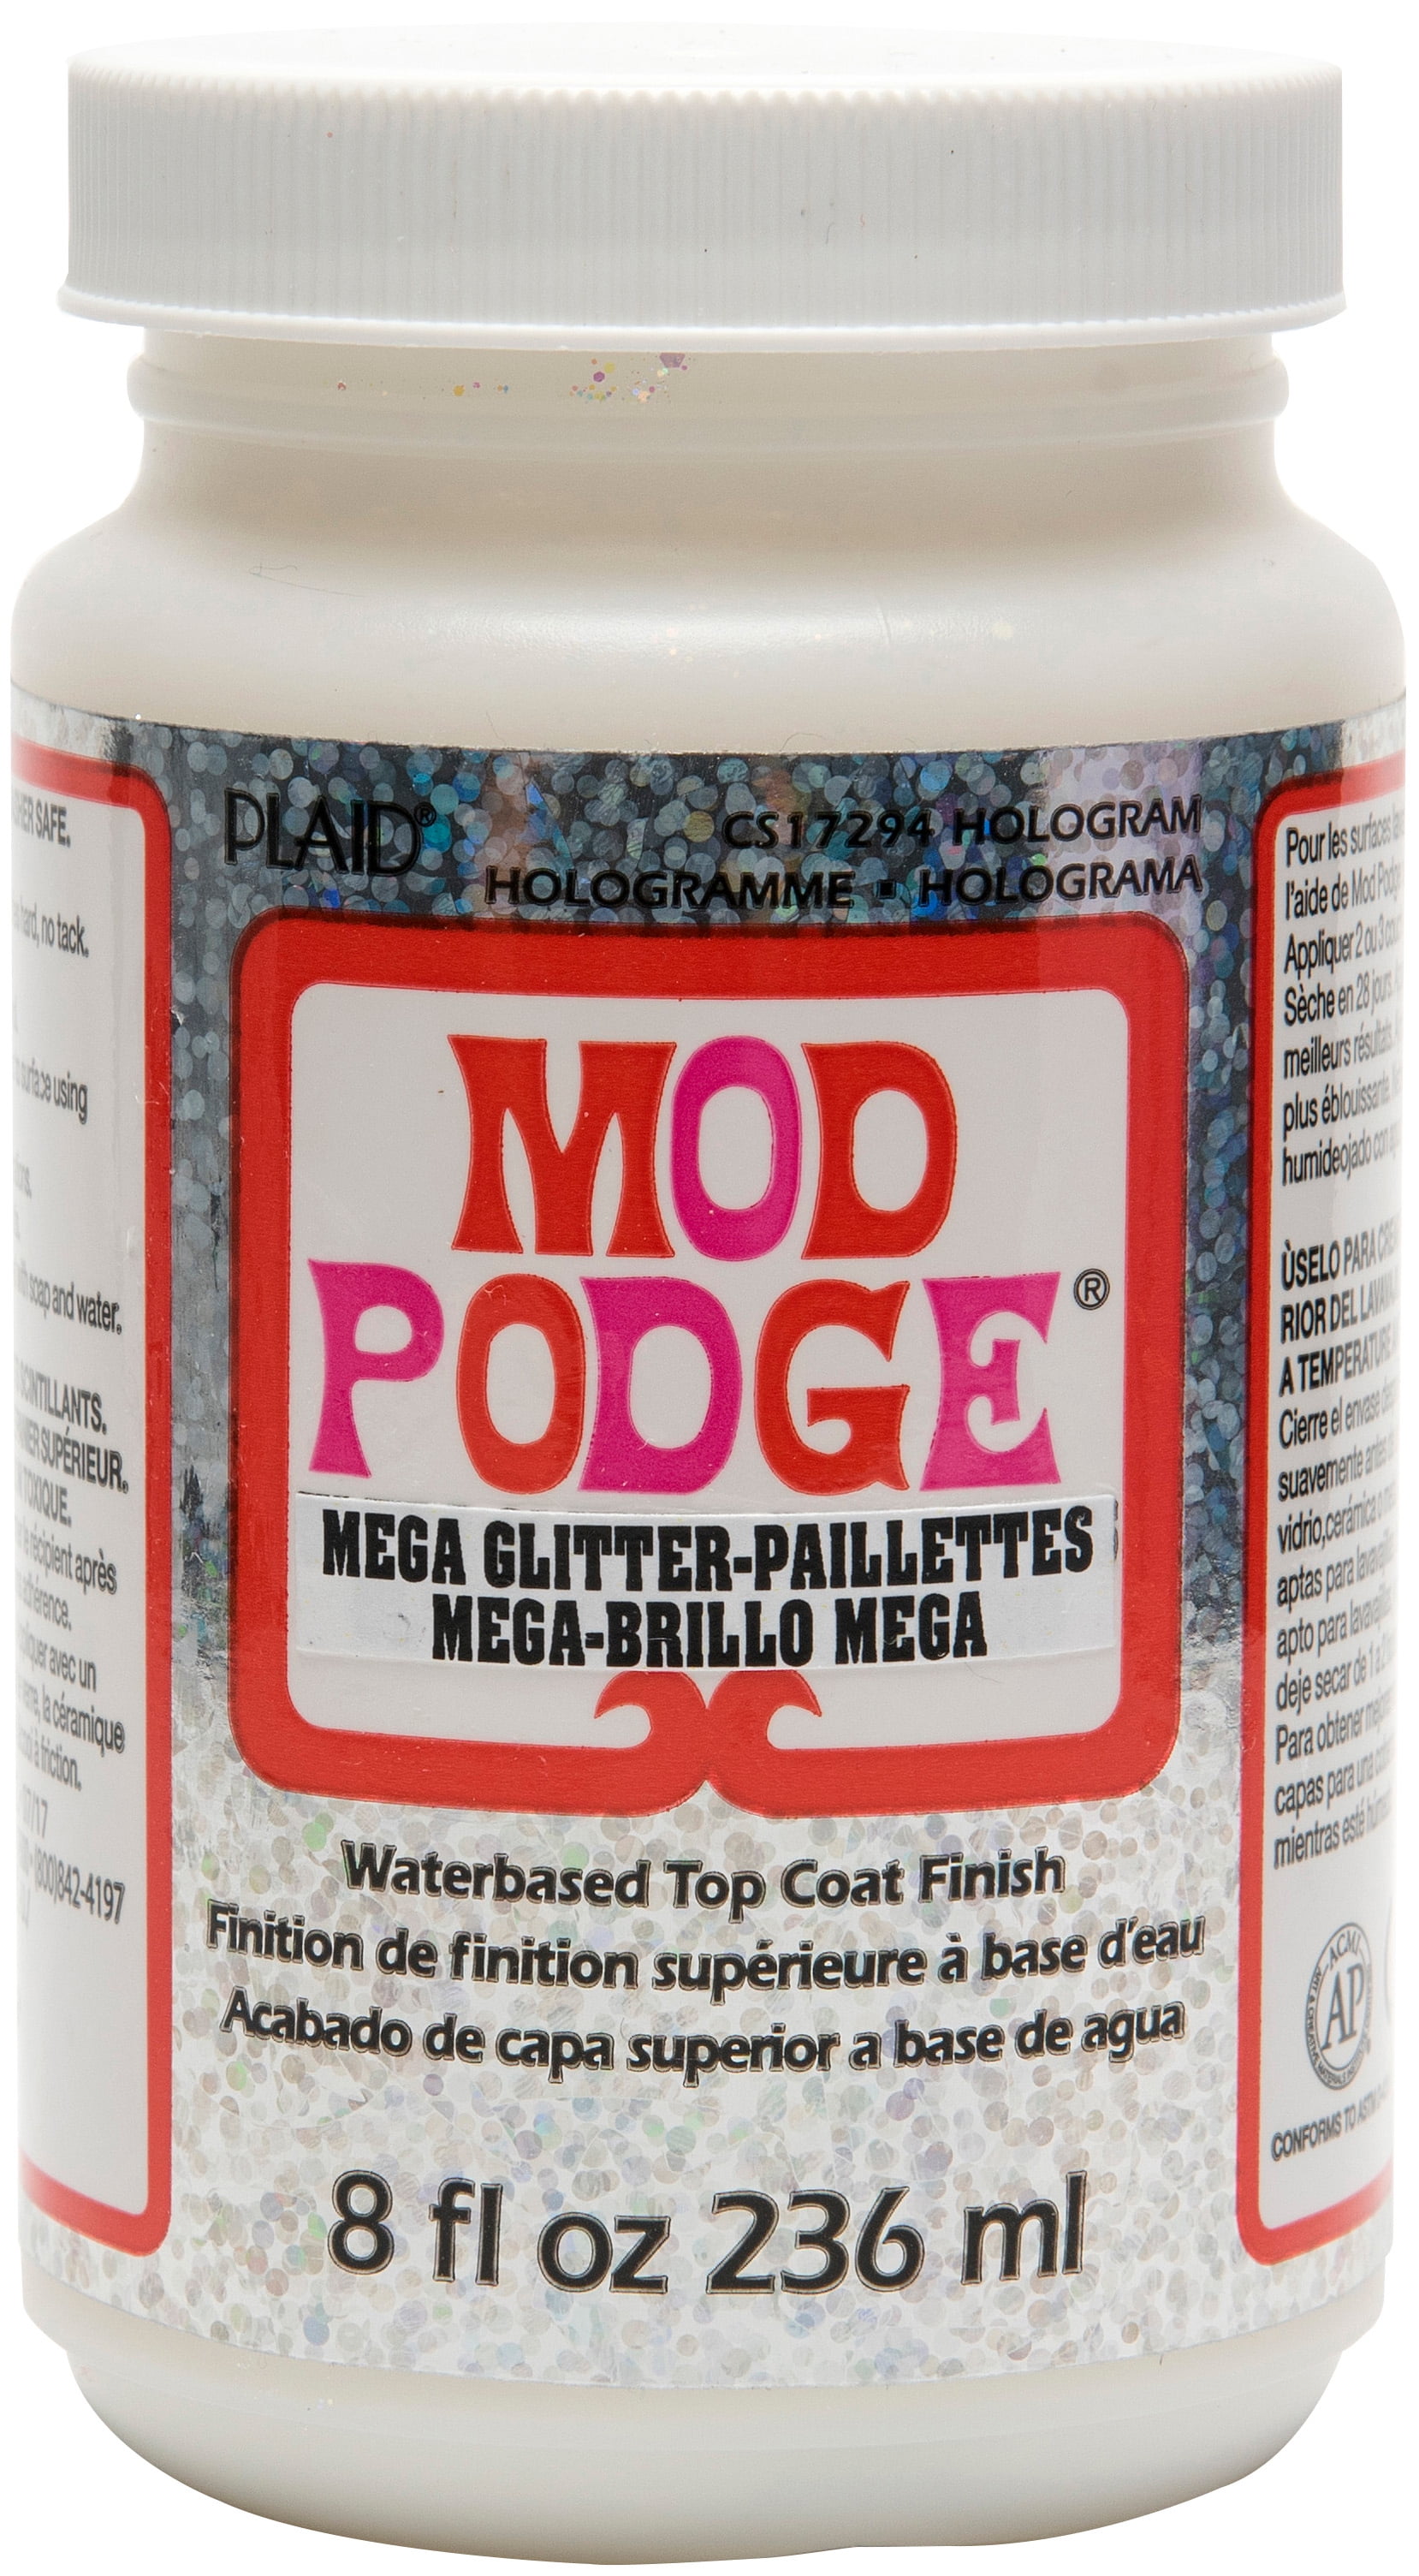 Mod Podge Mega Glitter Top Coat Finish, Hologram, 8 fl oz 